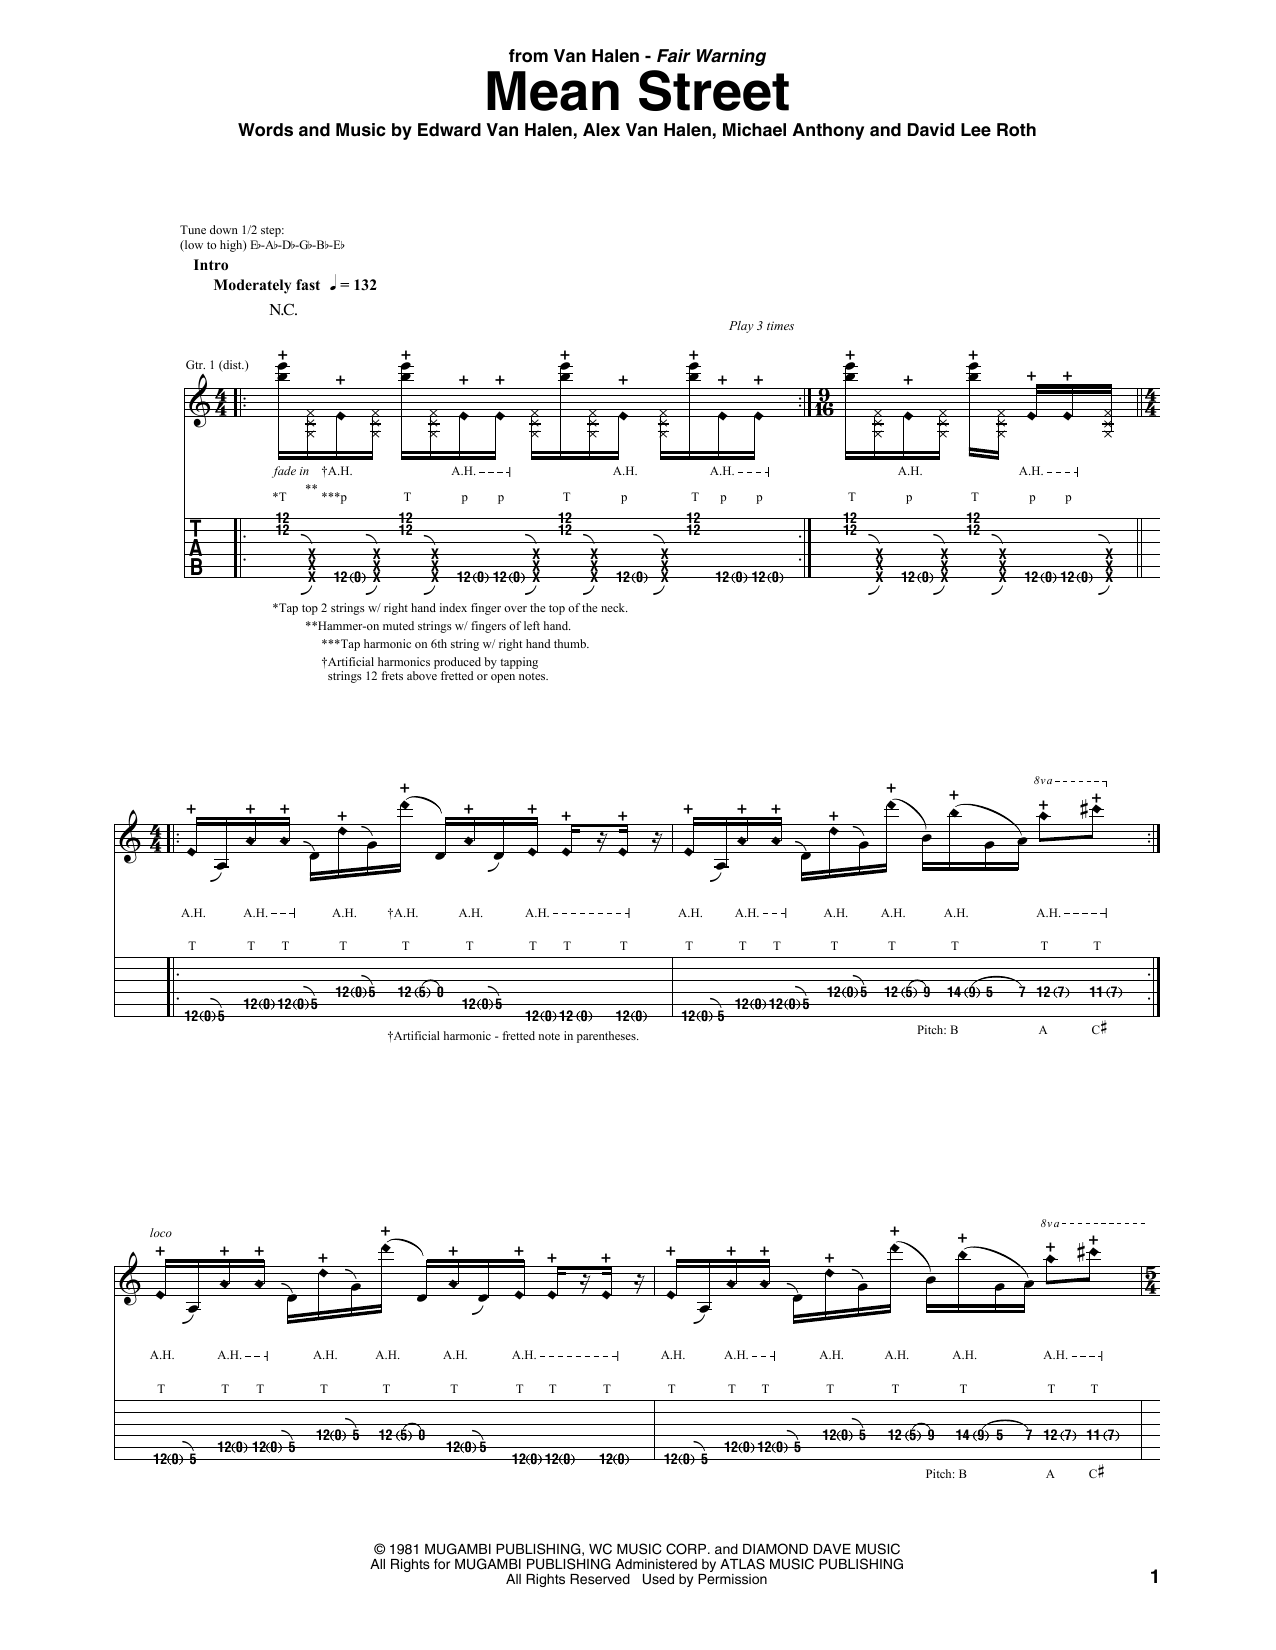 Van Halen Mean Street Sheet Music Notes & Chords for Guitar Tab - Download or Print PDF